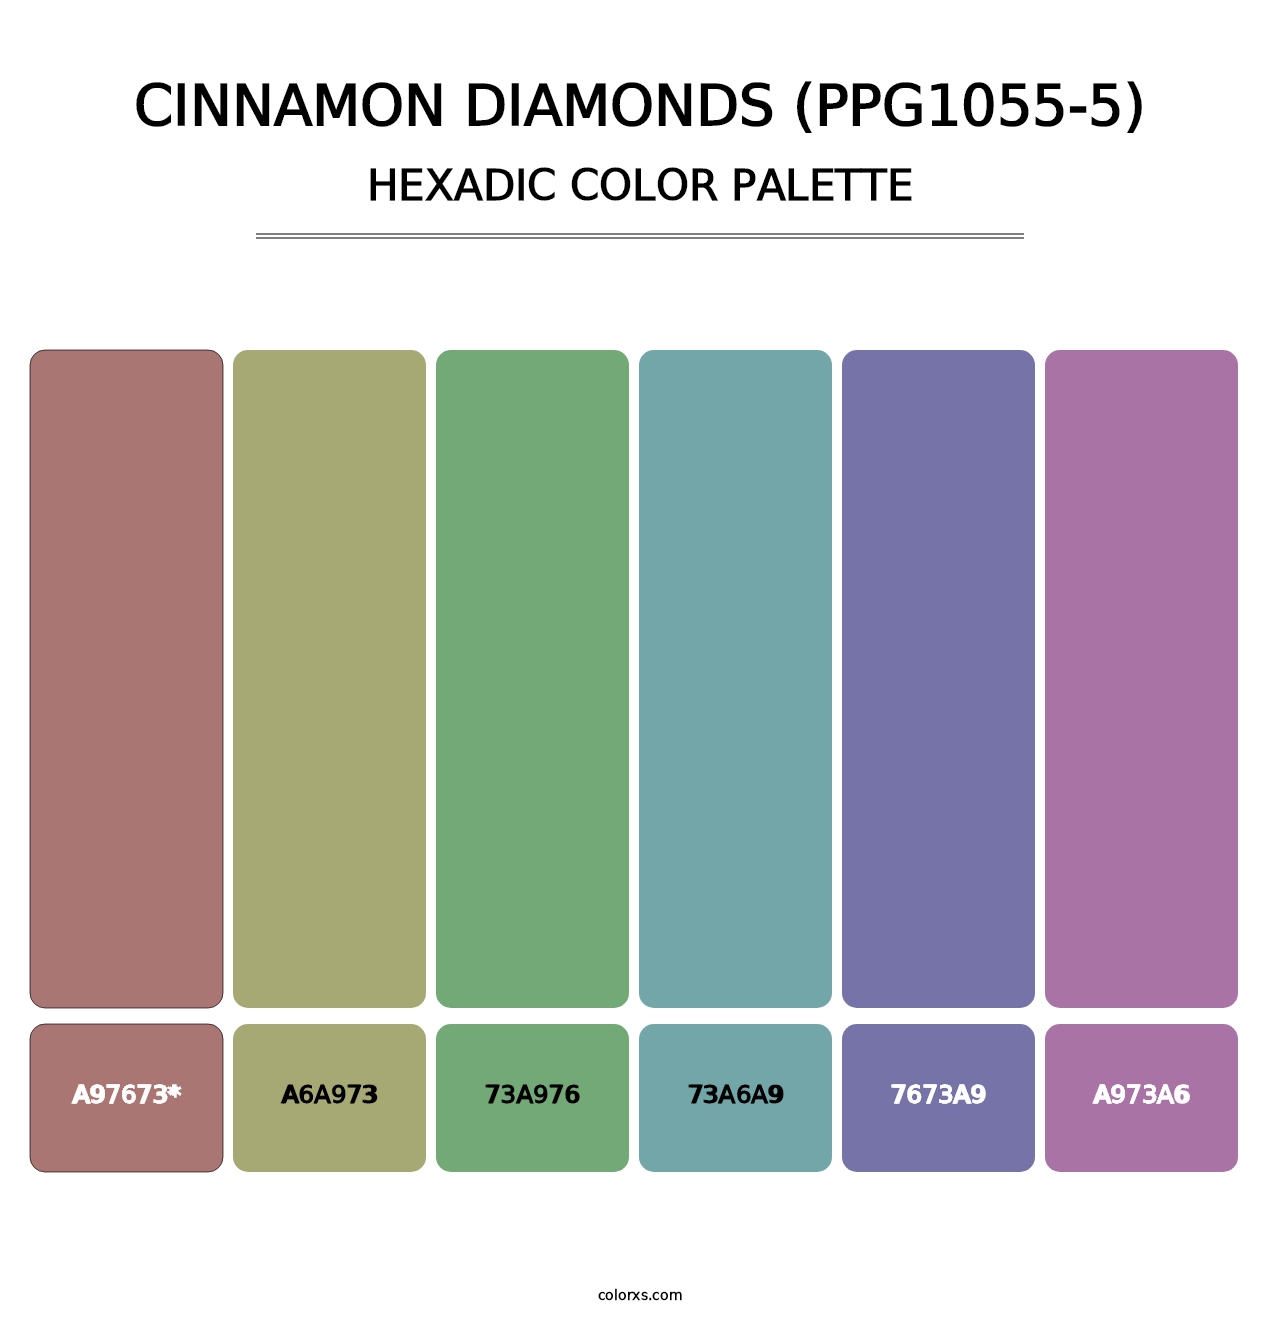 Cinnamon Diamonds (PPG1055-5) - Hexadic Color Palette